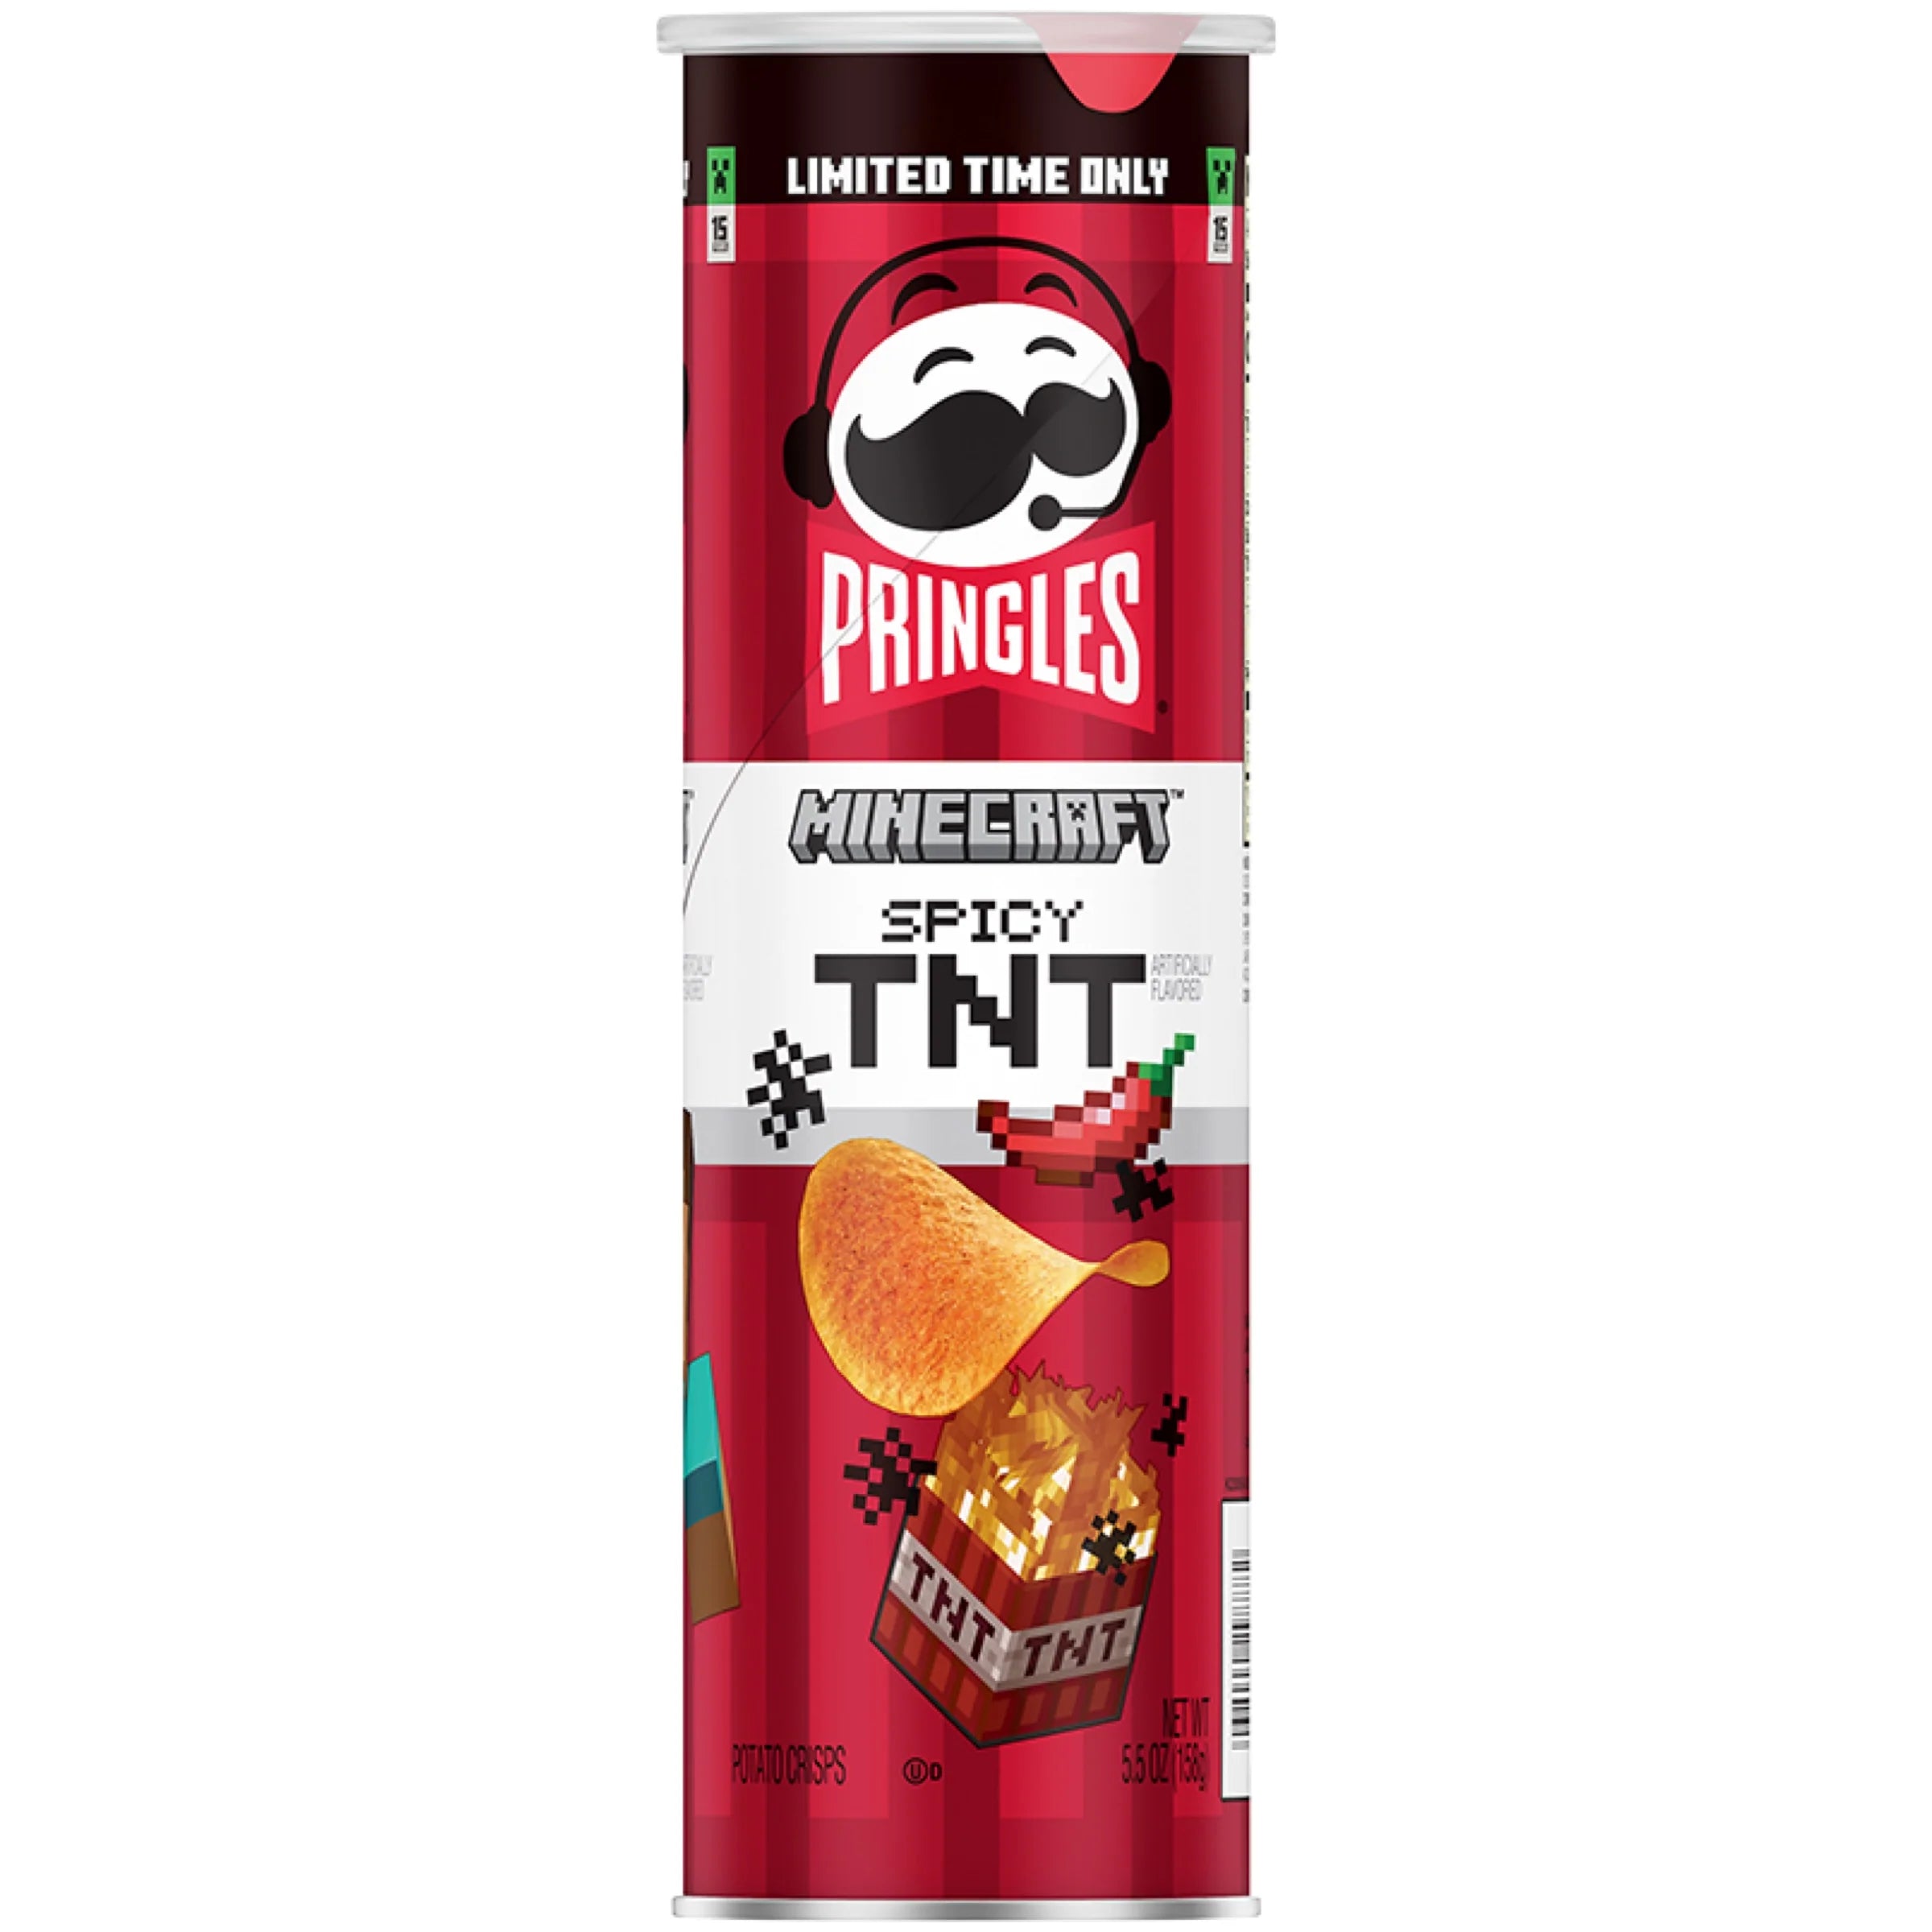 Pringles - Minecraft Spicy TNT - 158g